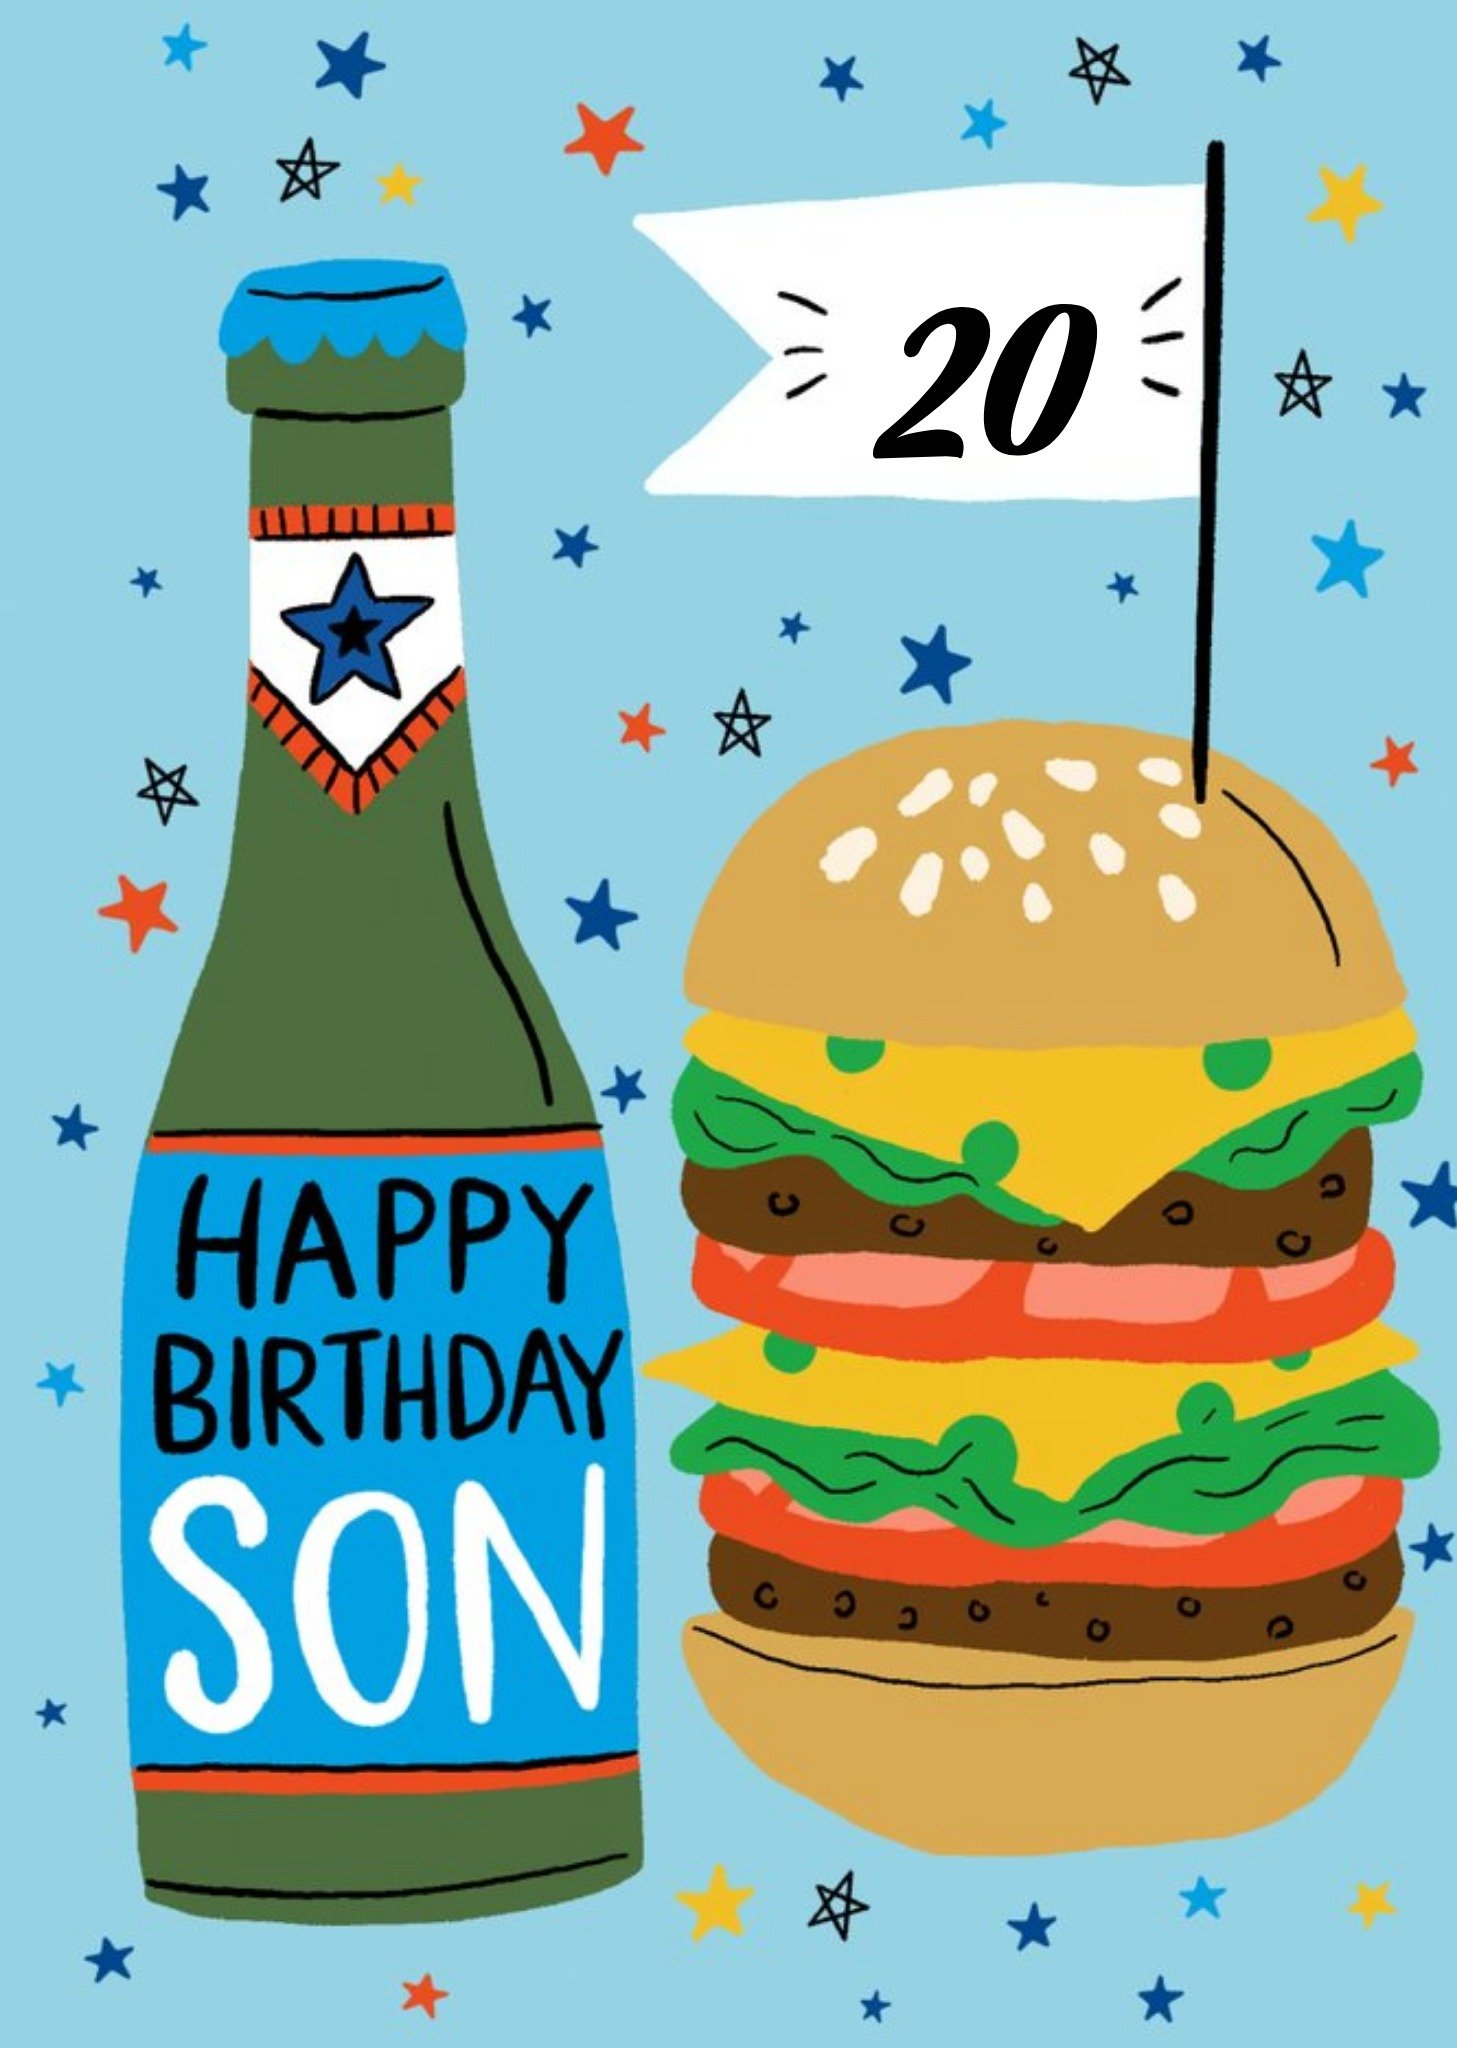 Moonpig Happy Birthday 20th Son Illustrated Beer Bottle And Burger Birthday Card Ecard